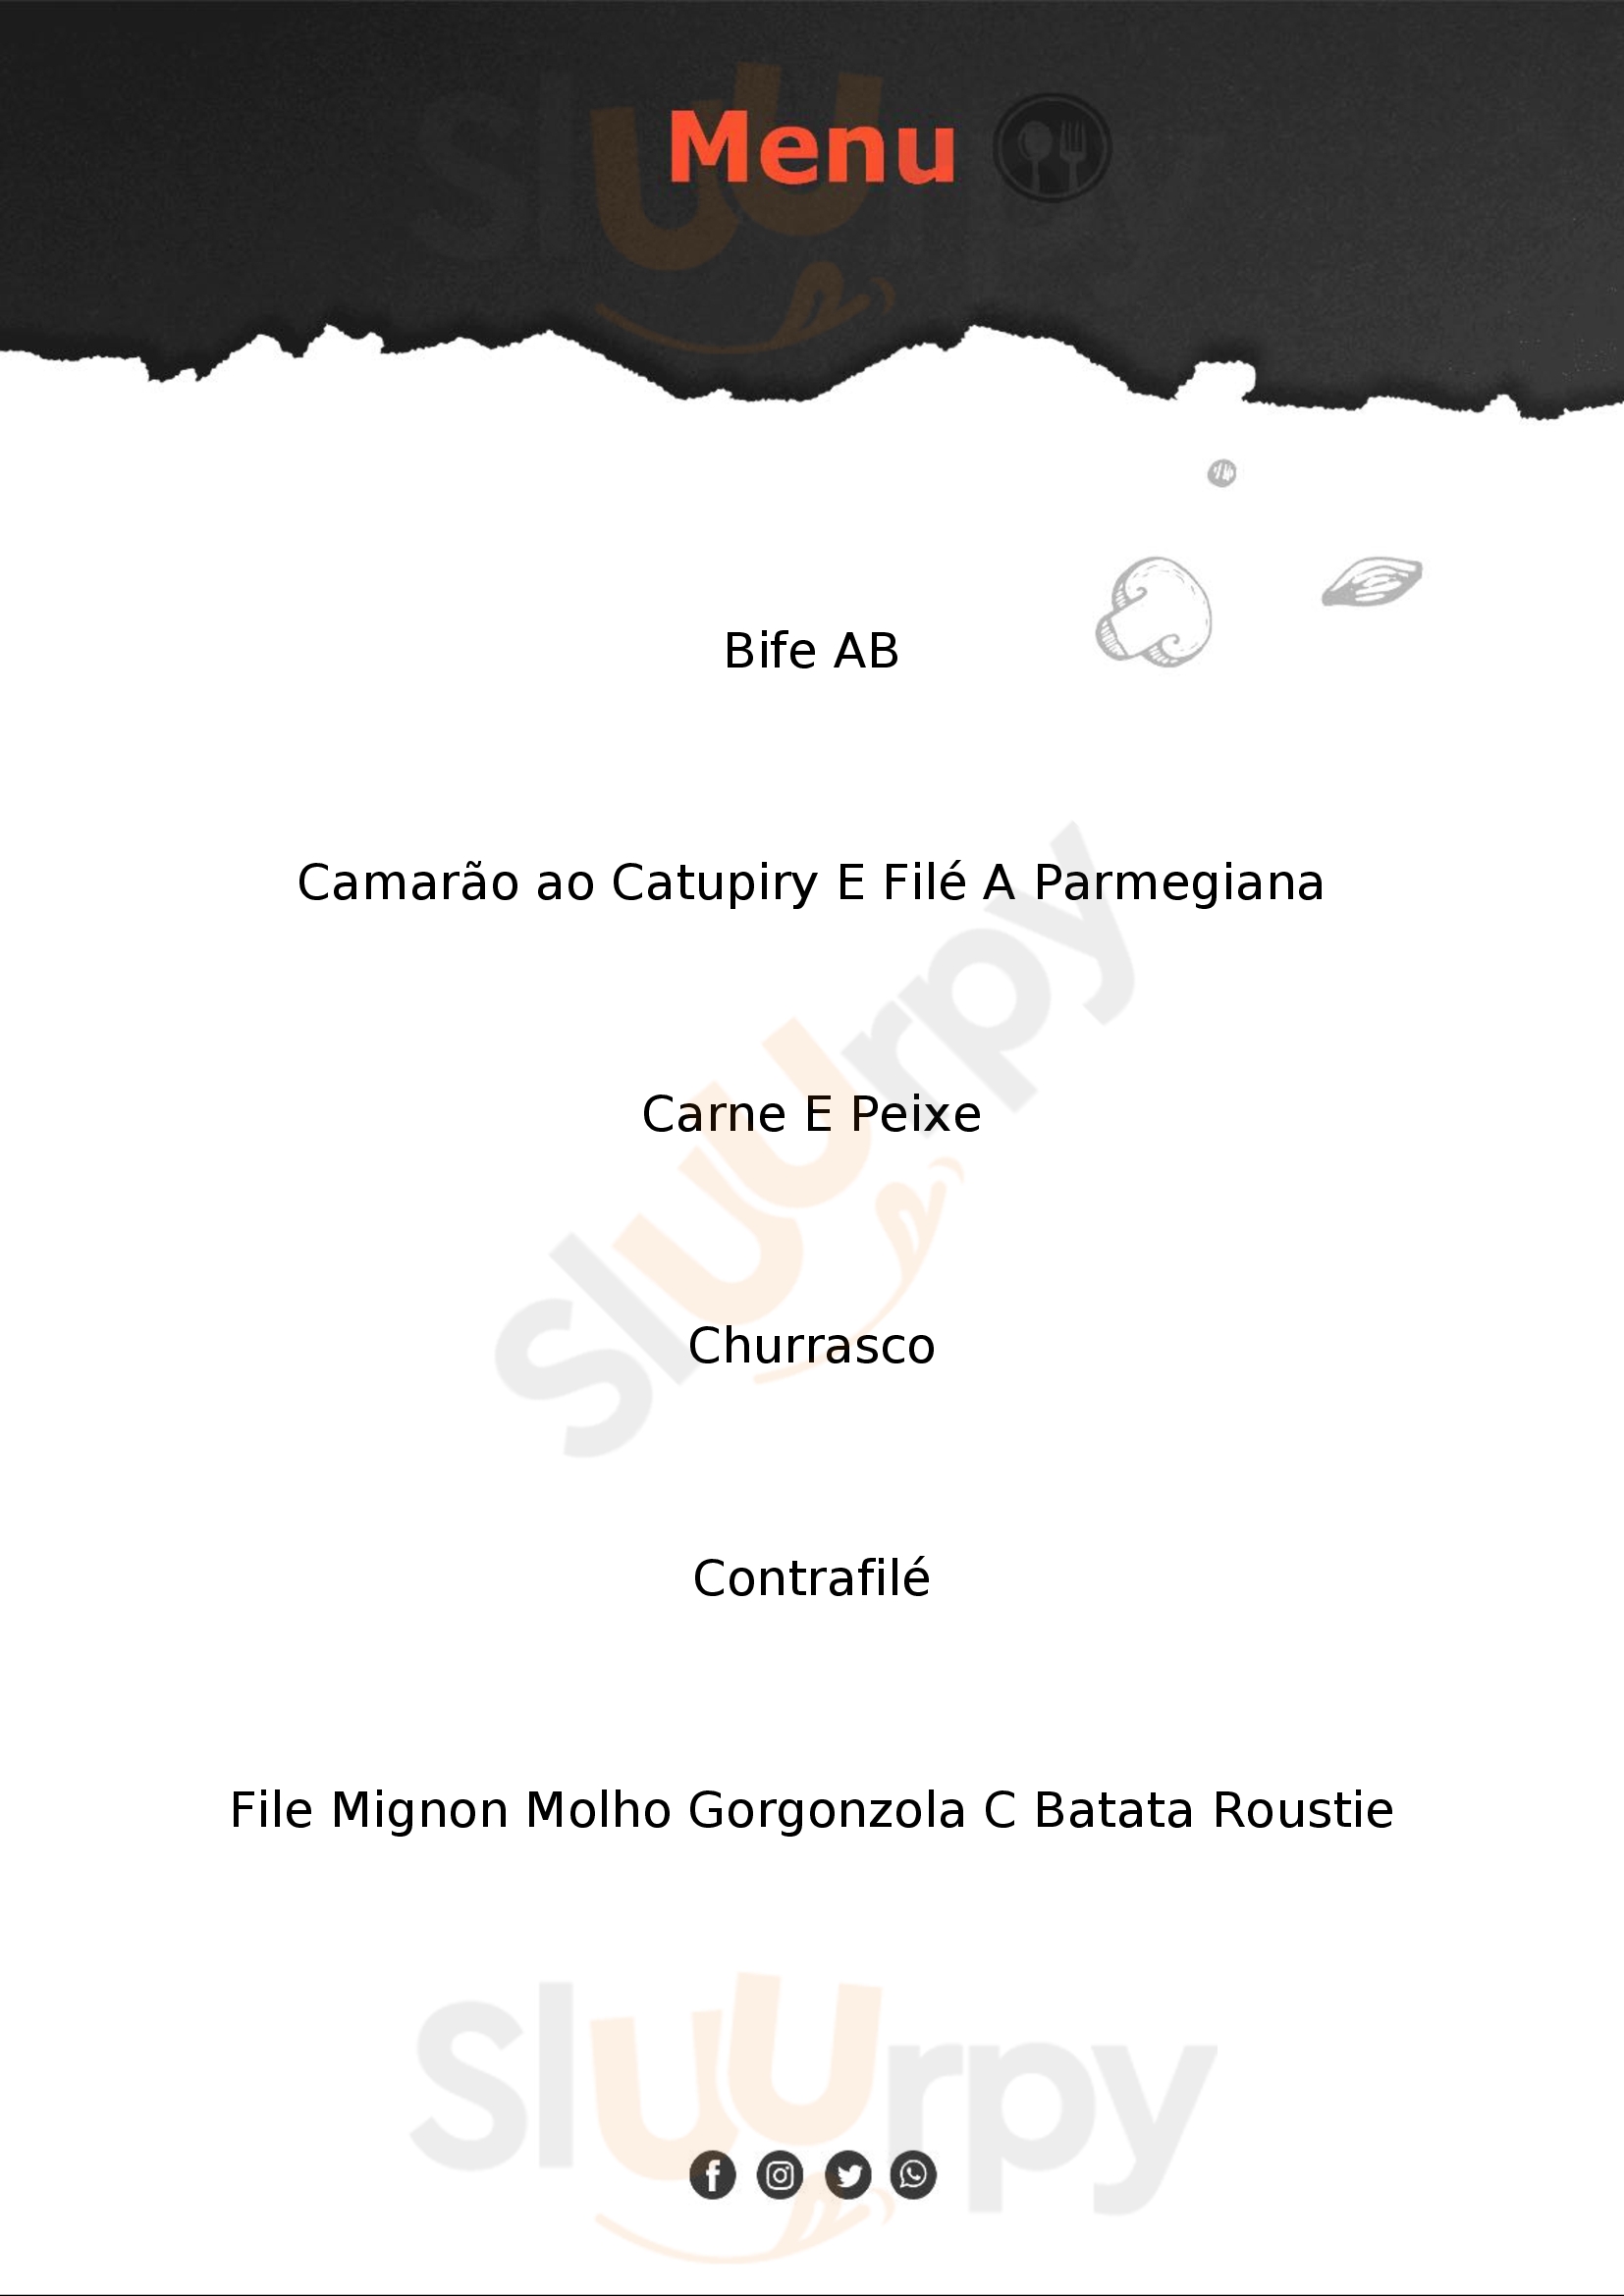 Caravaggio Restaurante Resende Menu - 1